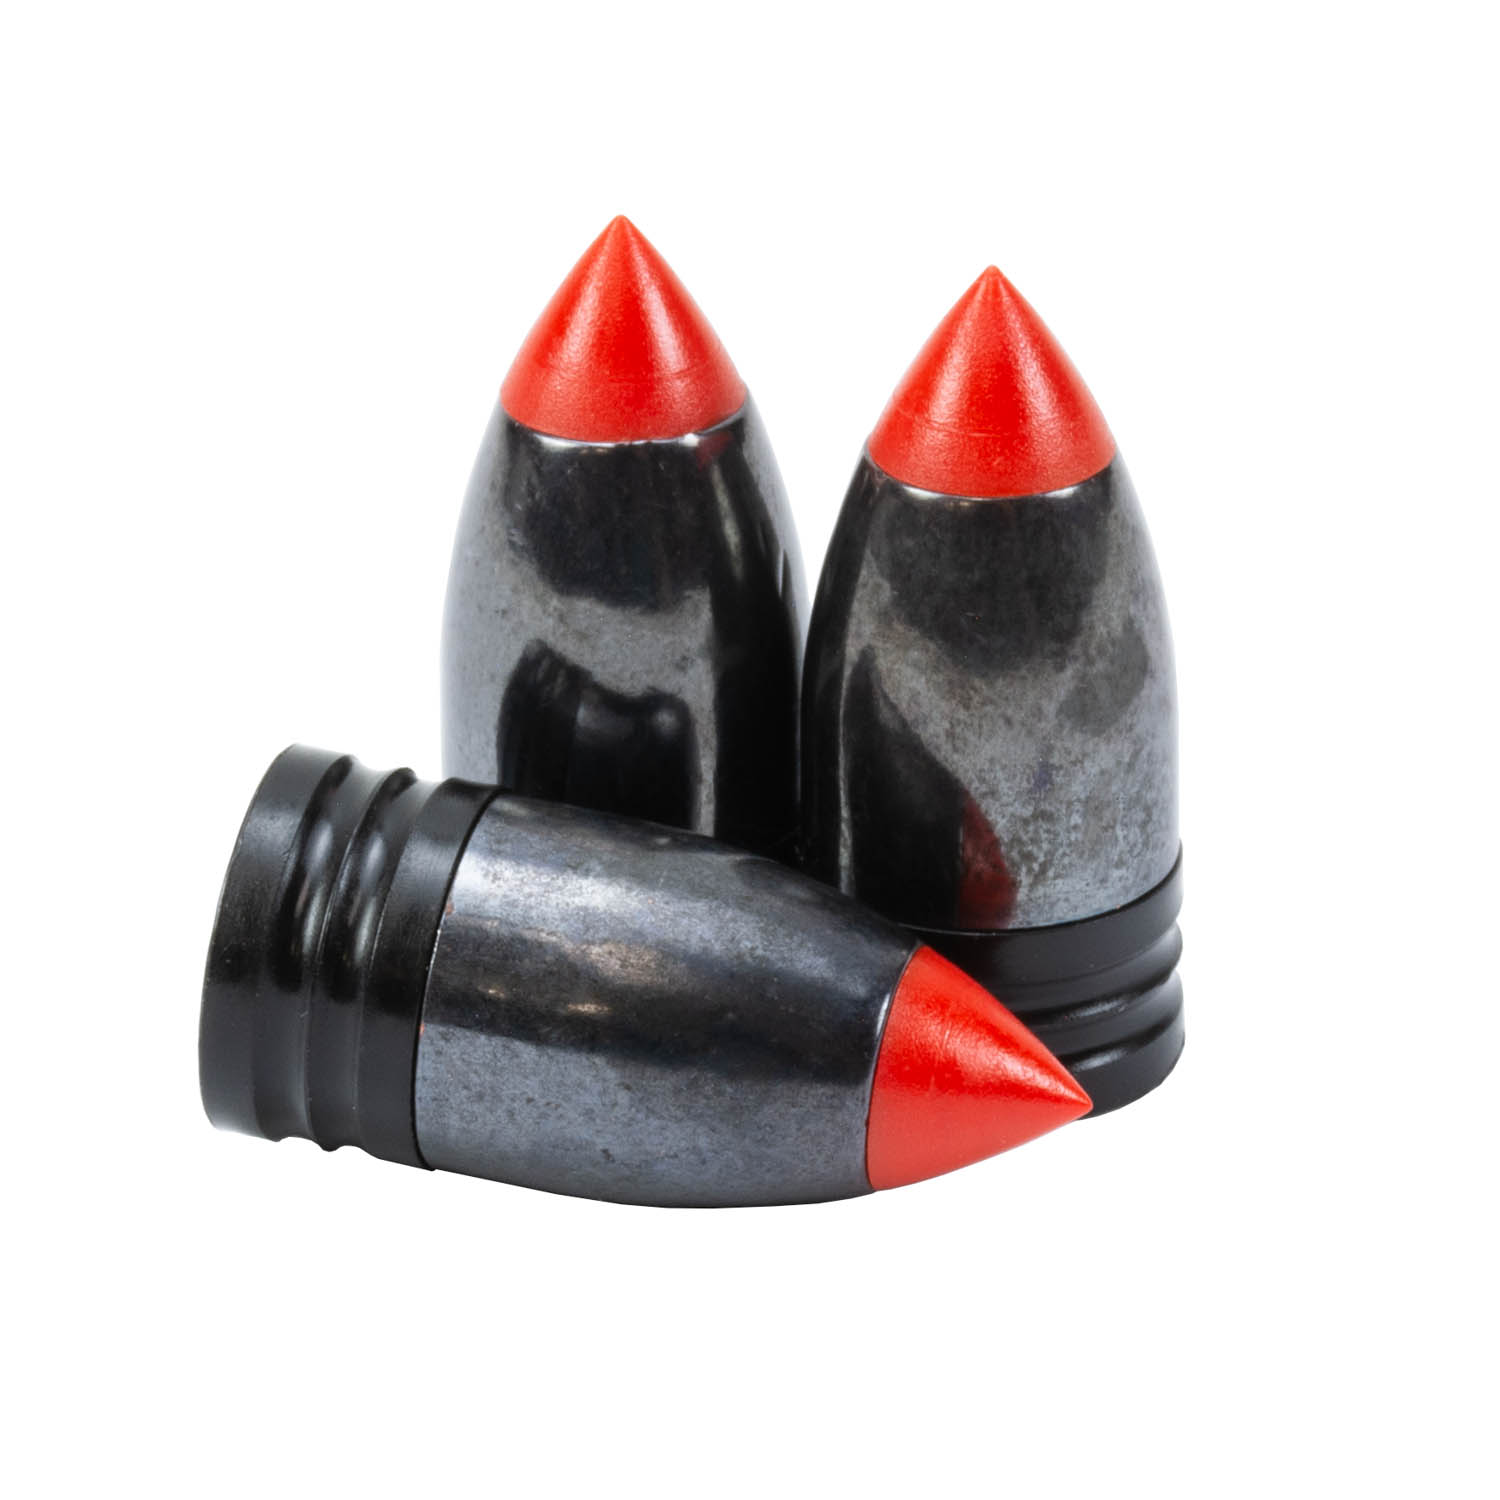 Powerbelt® Aerolite™ Bullets, 50 Cal 250 Grain